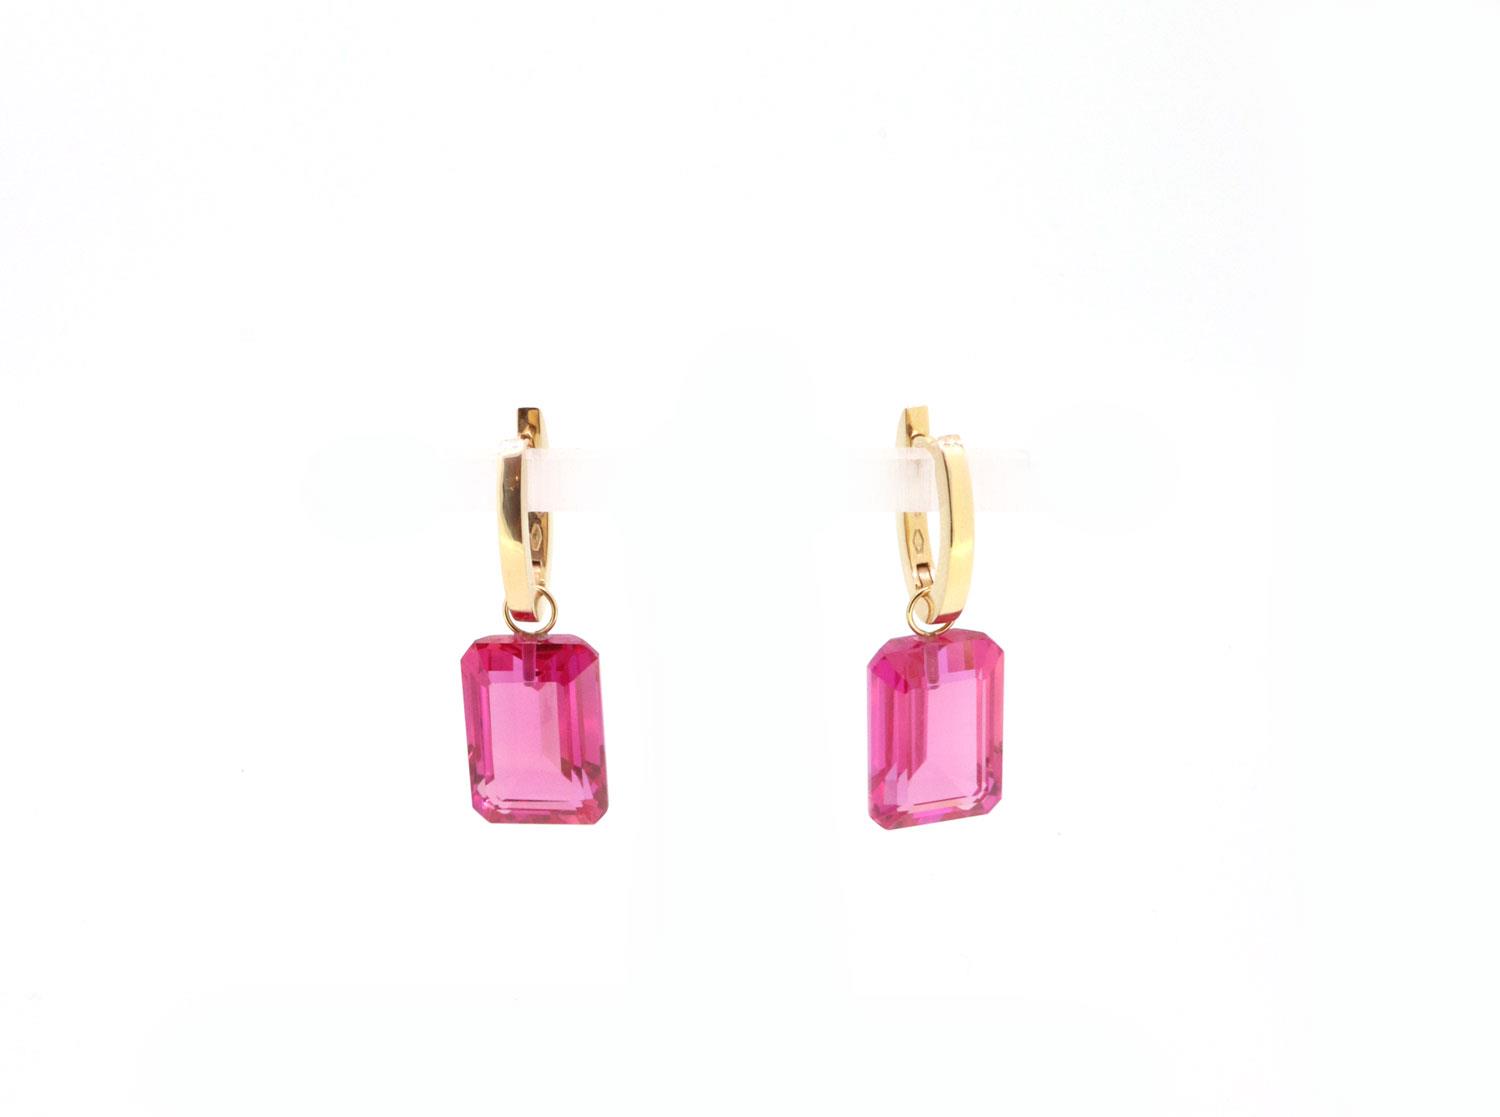 Ohrschmuck Einhänger Rubin pink Roségold - Individuelle Marken - 321nico10-10